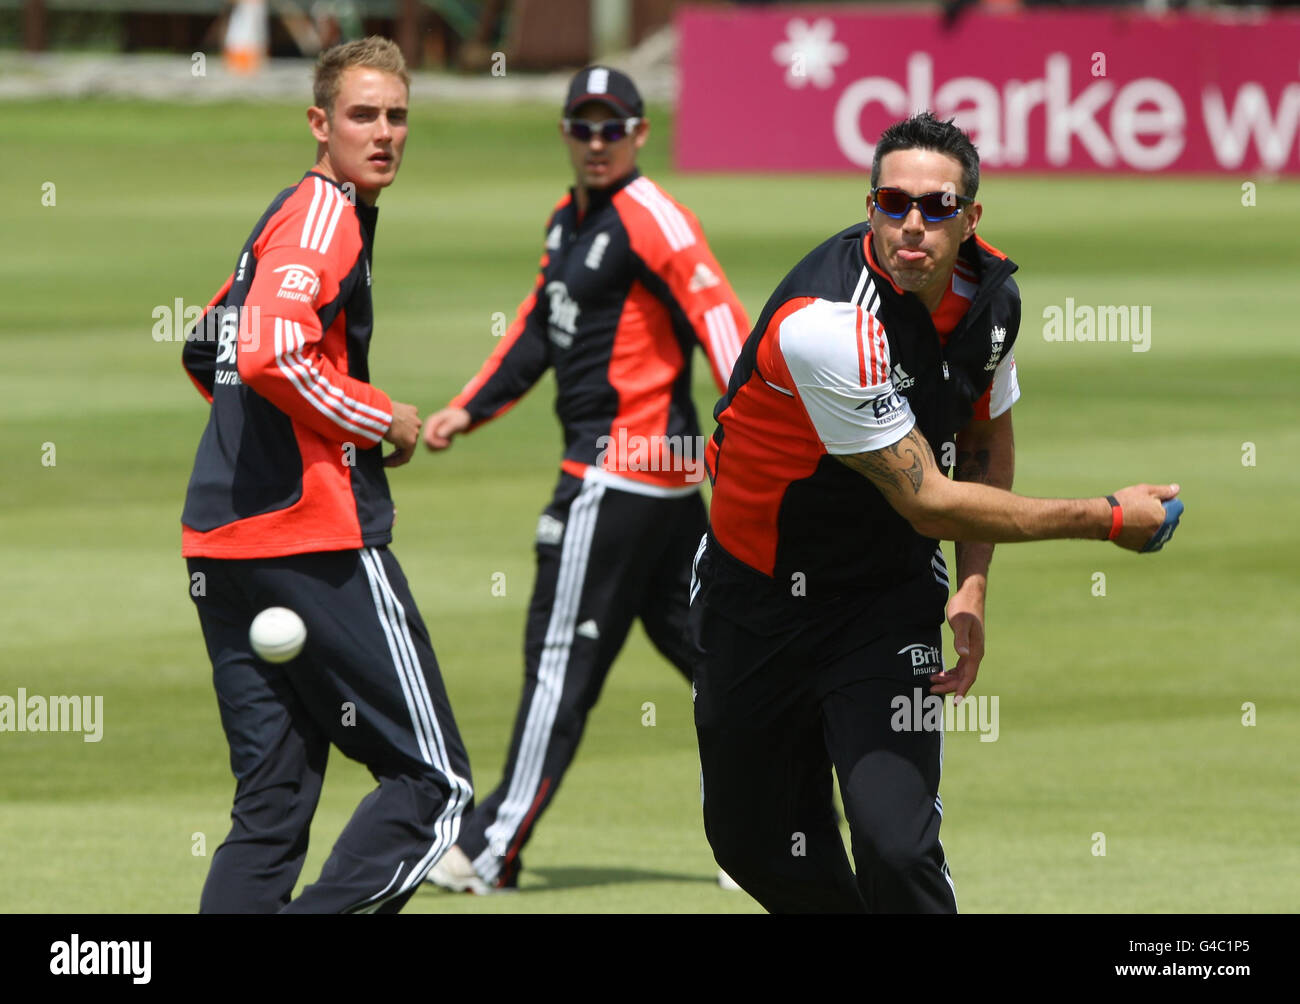 Cricket - International Twenty20 - England v Sri Lanka - England Nets Session - Day One - The County Ground Stock Photo